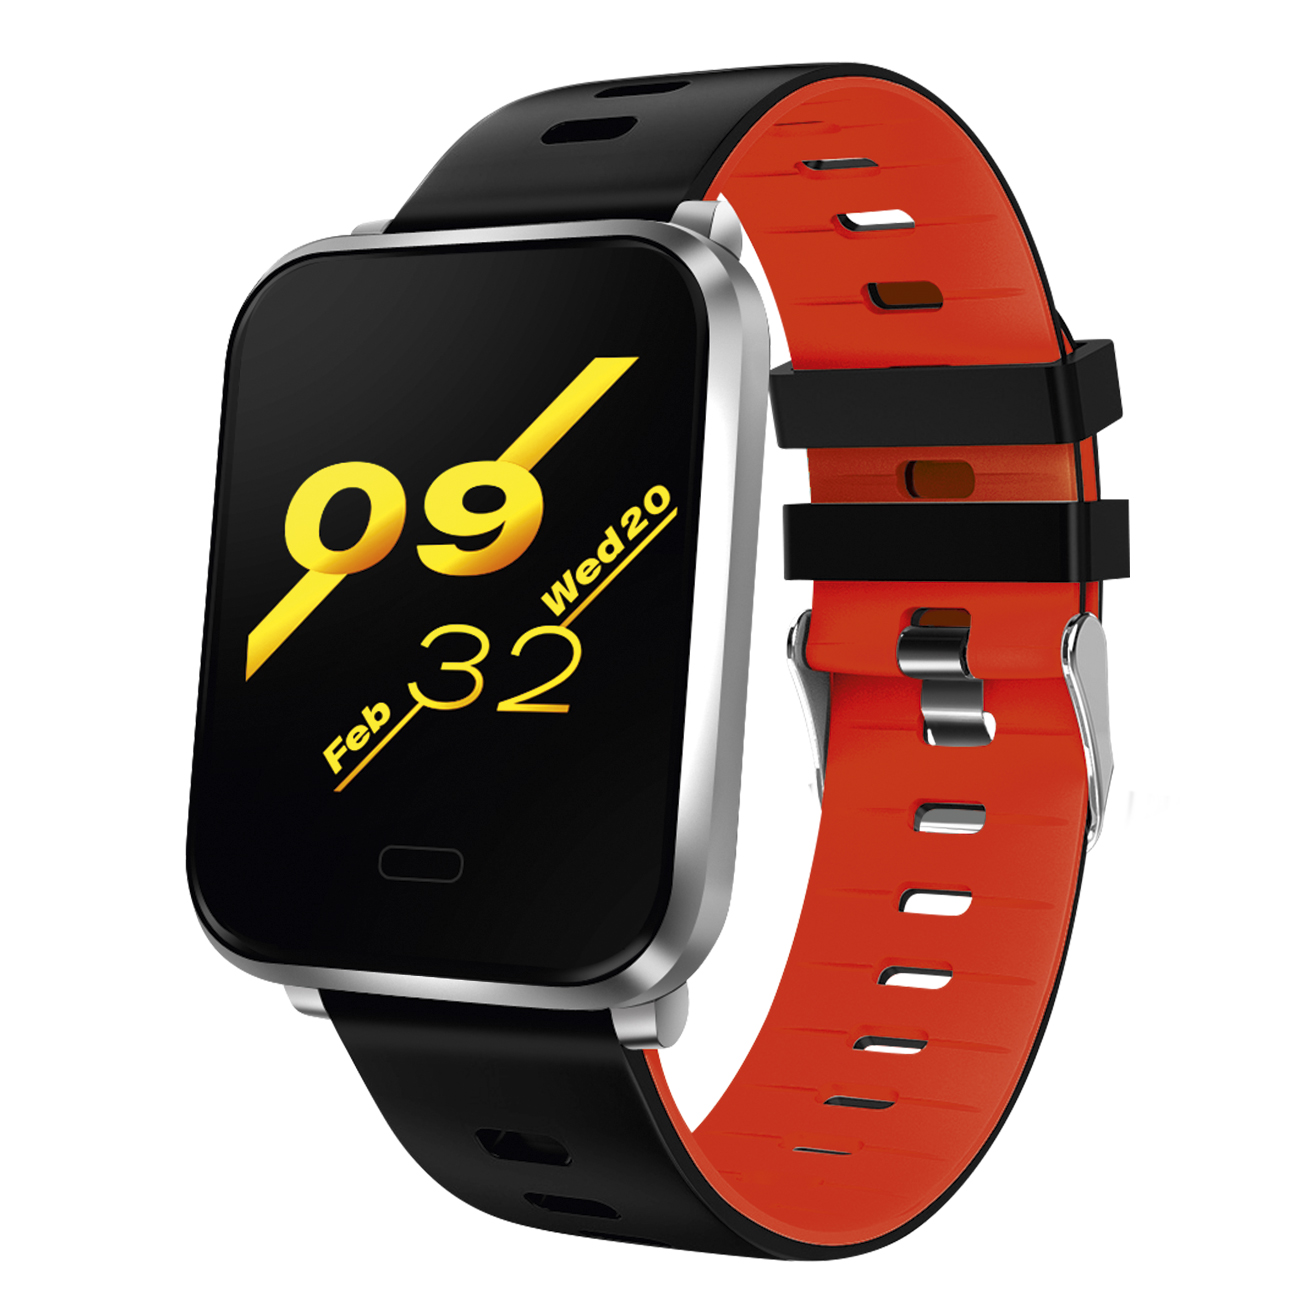 Fitness Tracker mit rot-schwarzem Silikonband